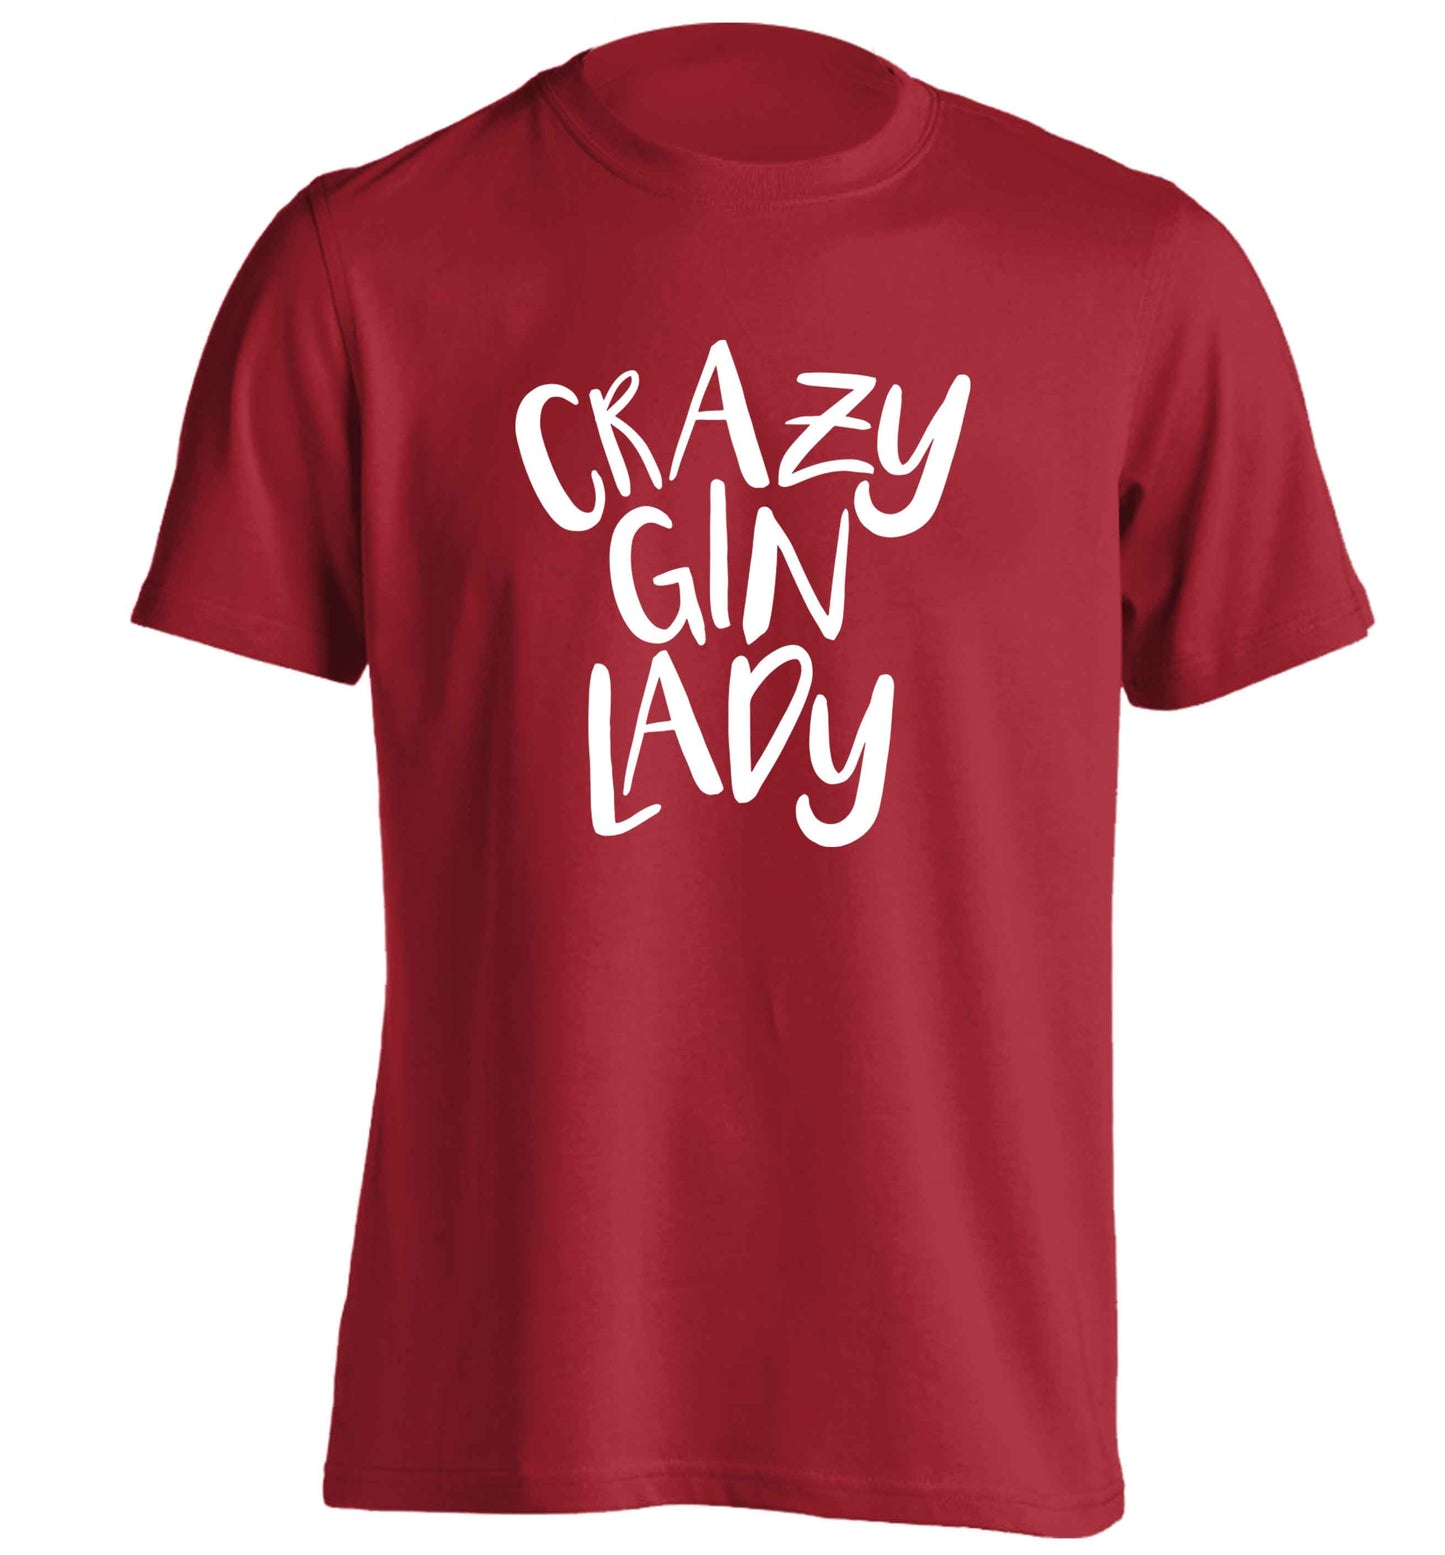 Crazy gin lady adults unisex red Tshirt 2XL